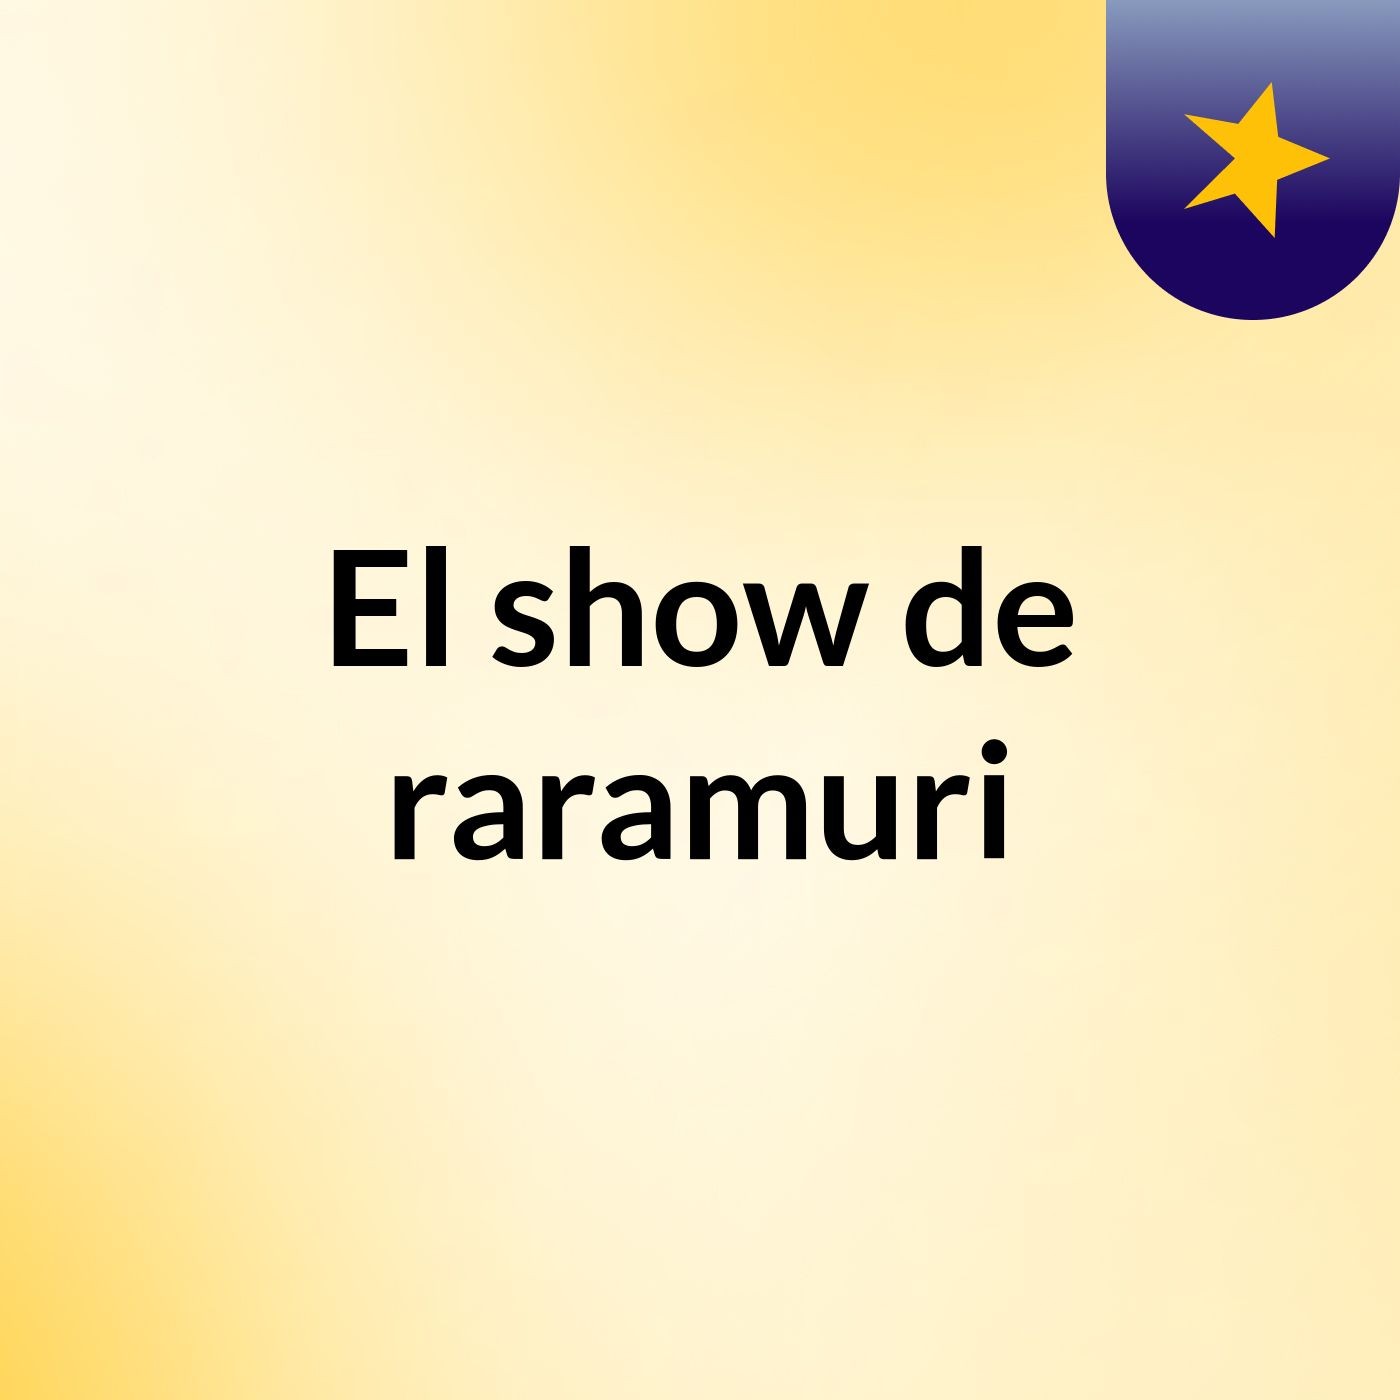 El show de raramuri